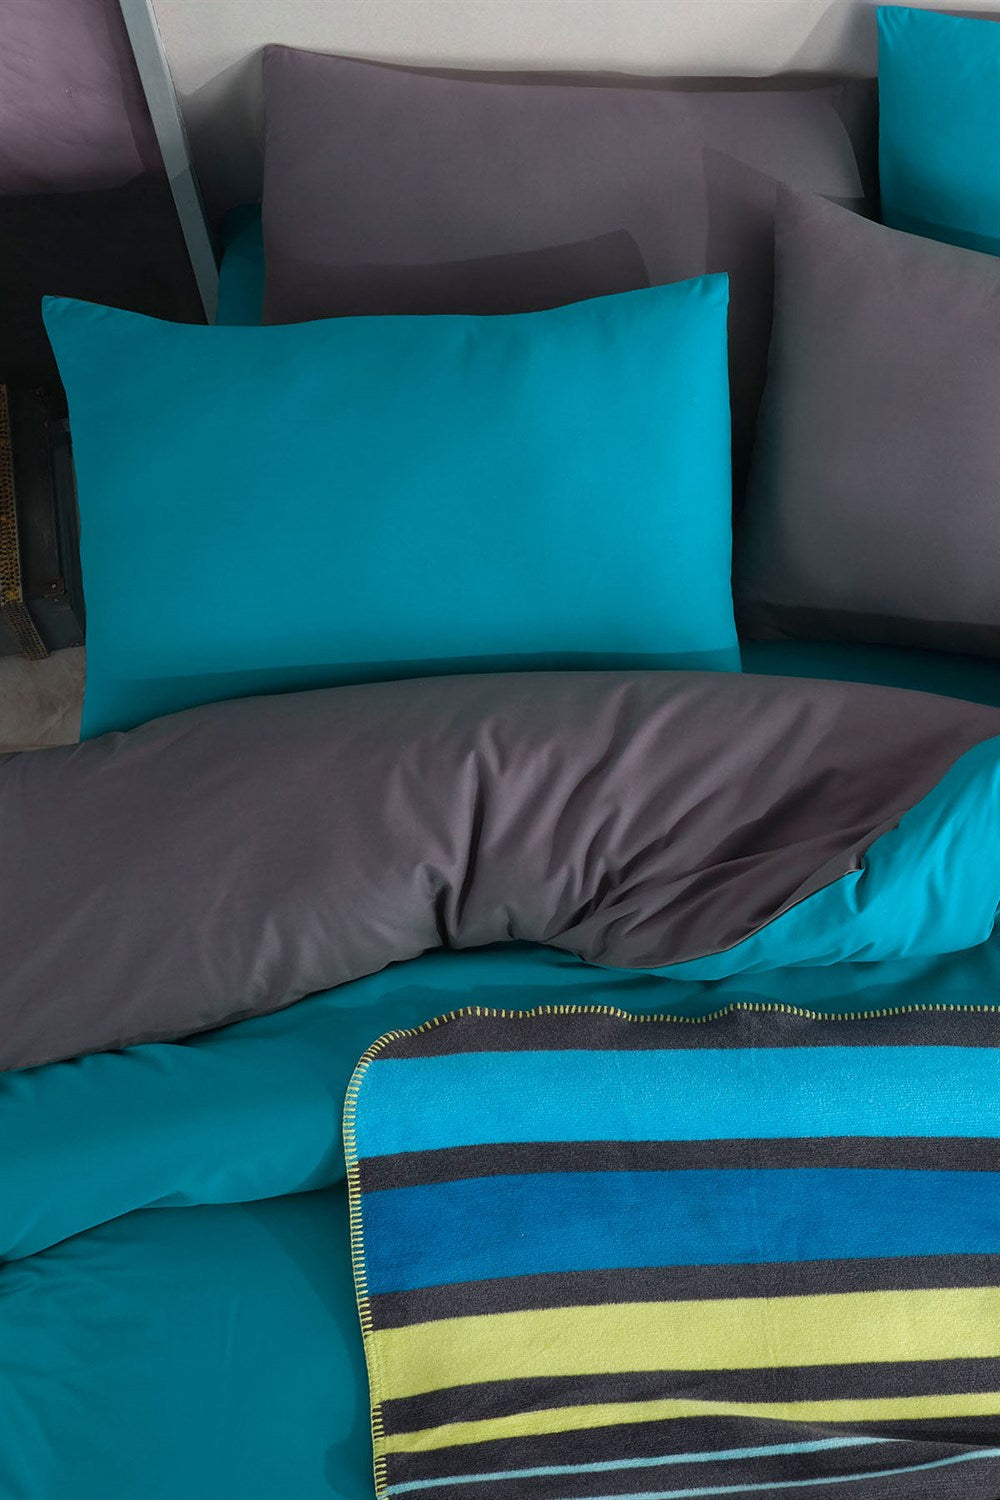 Iyi Geceler Istanbul - InLine Bettbezug-Set für Einzelbett 160x220cm Farbe: Petrol Blau